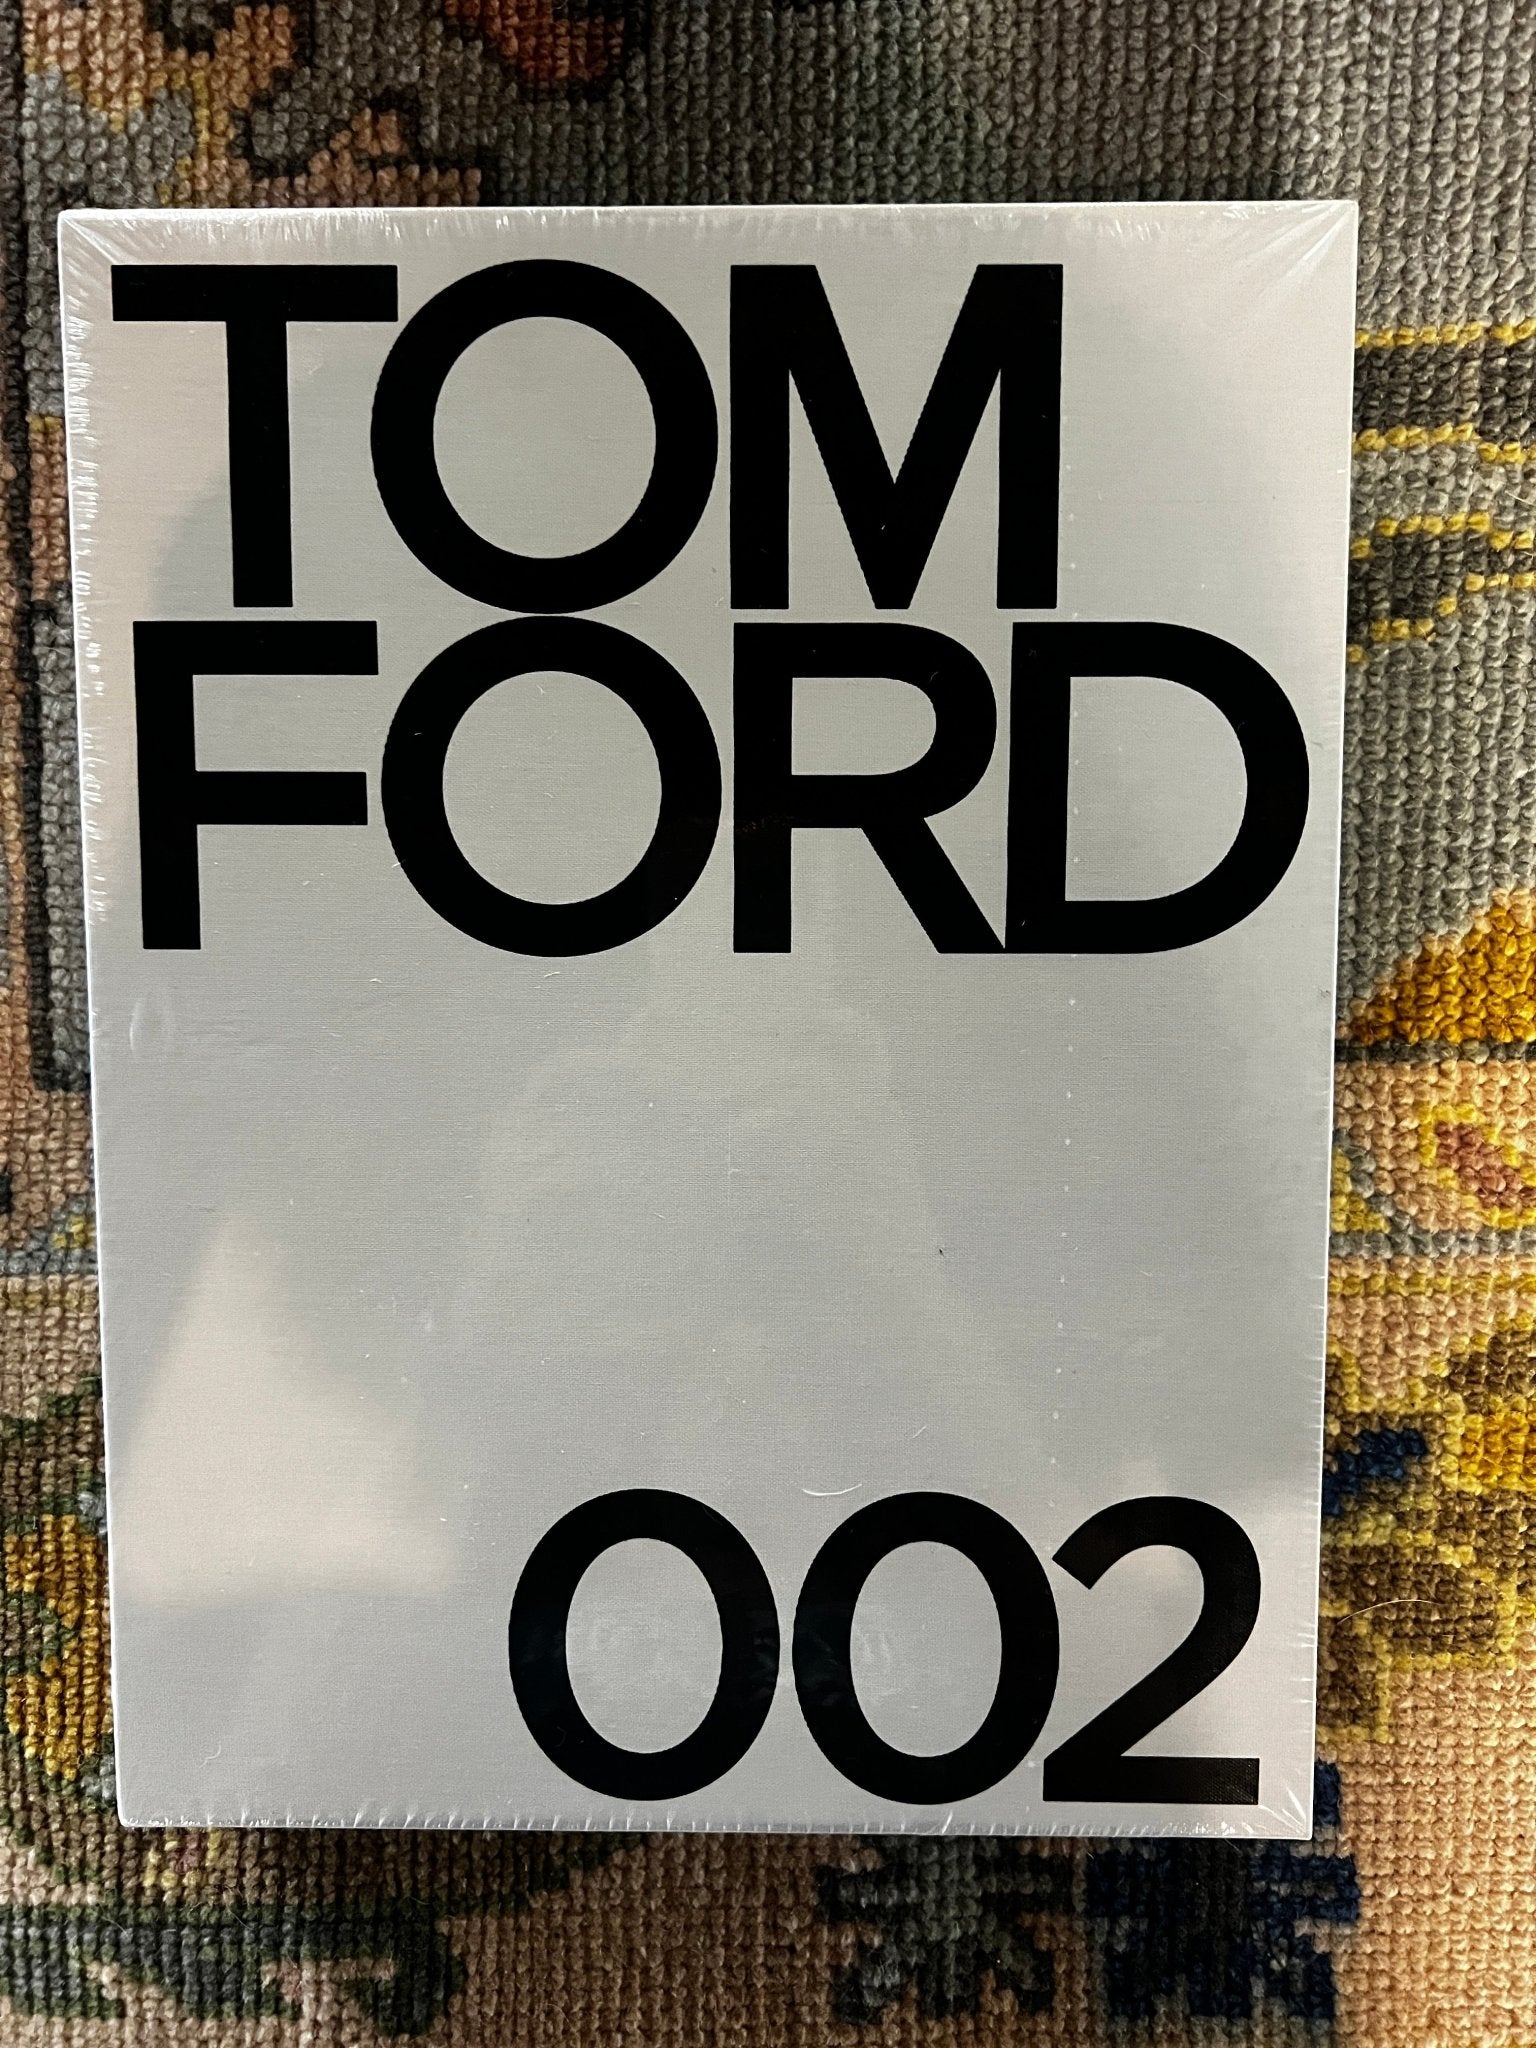 TOM FORD BOOK 002 REGULAR